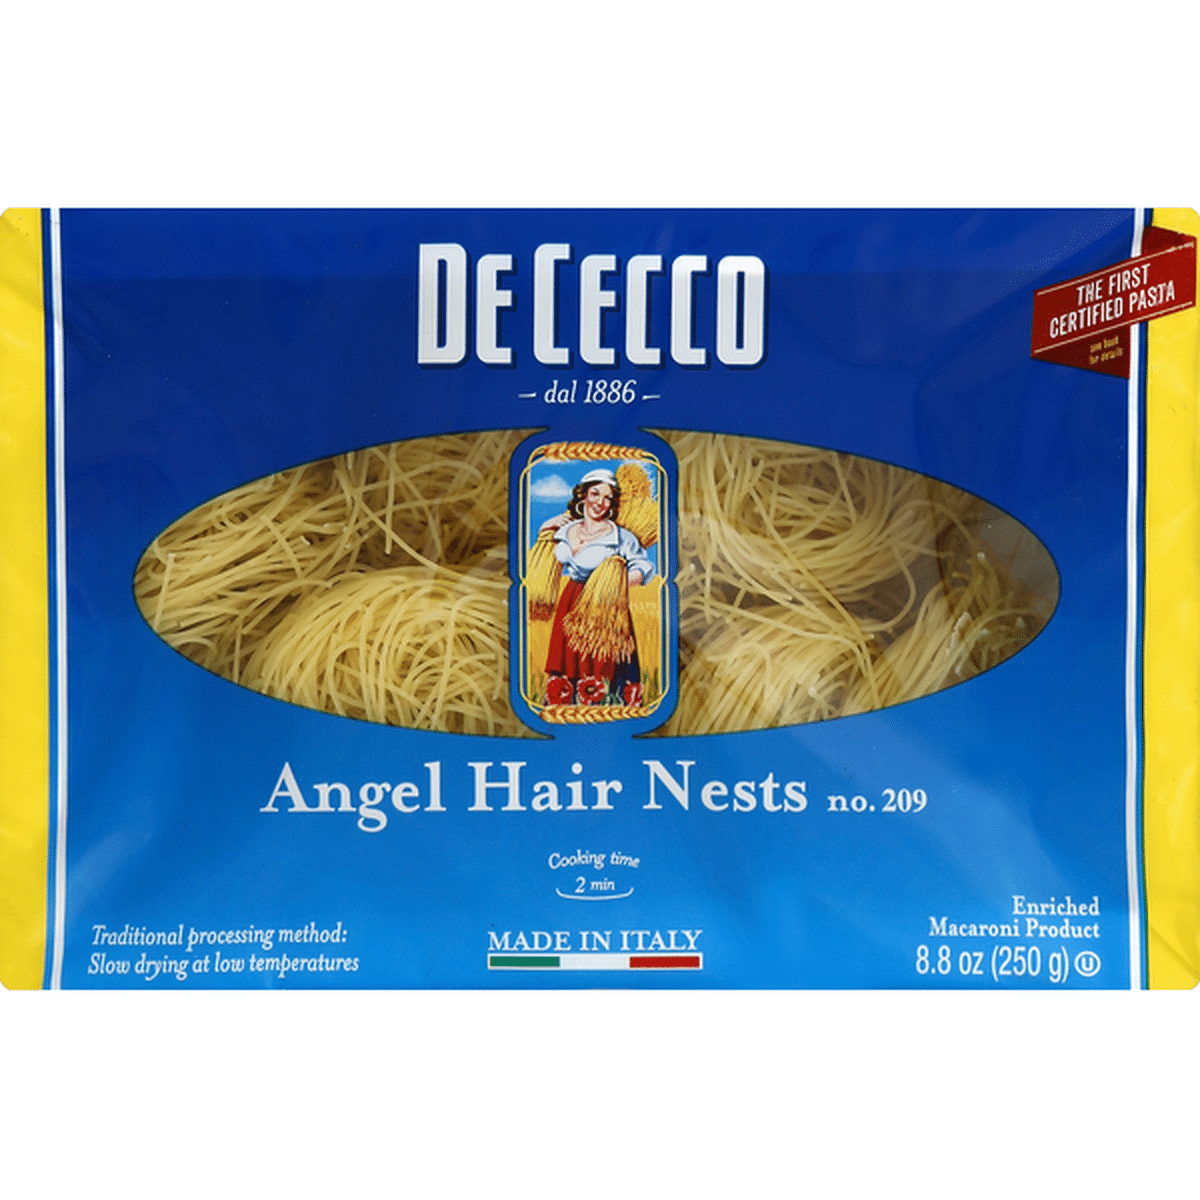 Angel Hair Nests no. 209